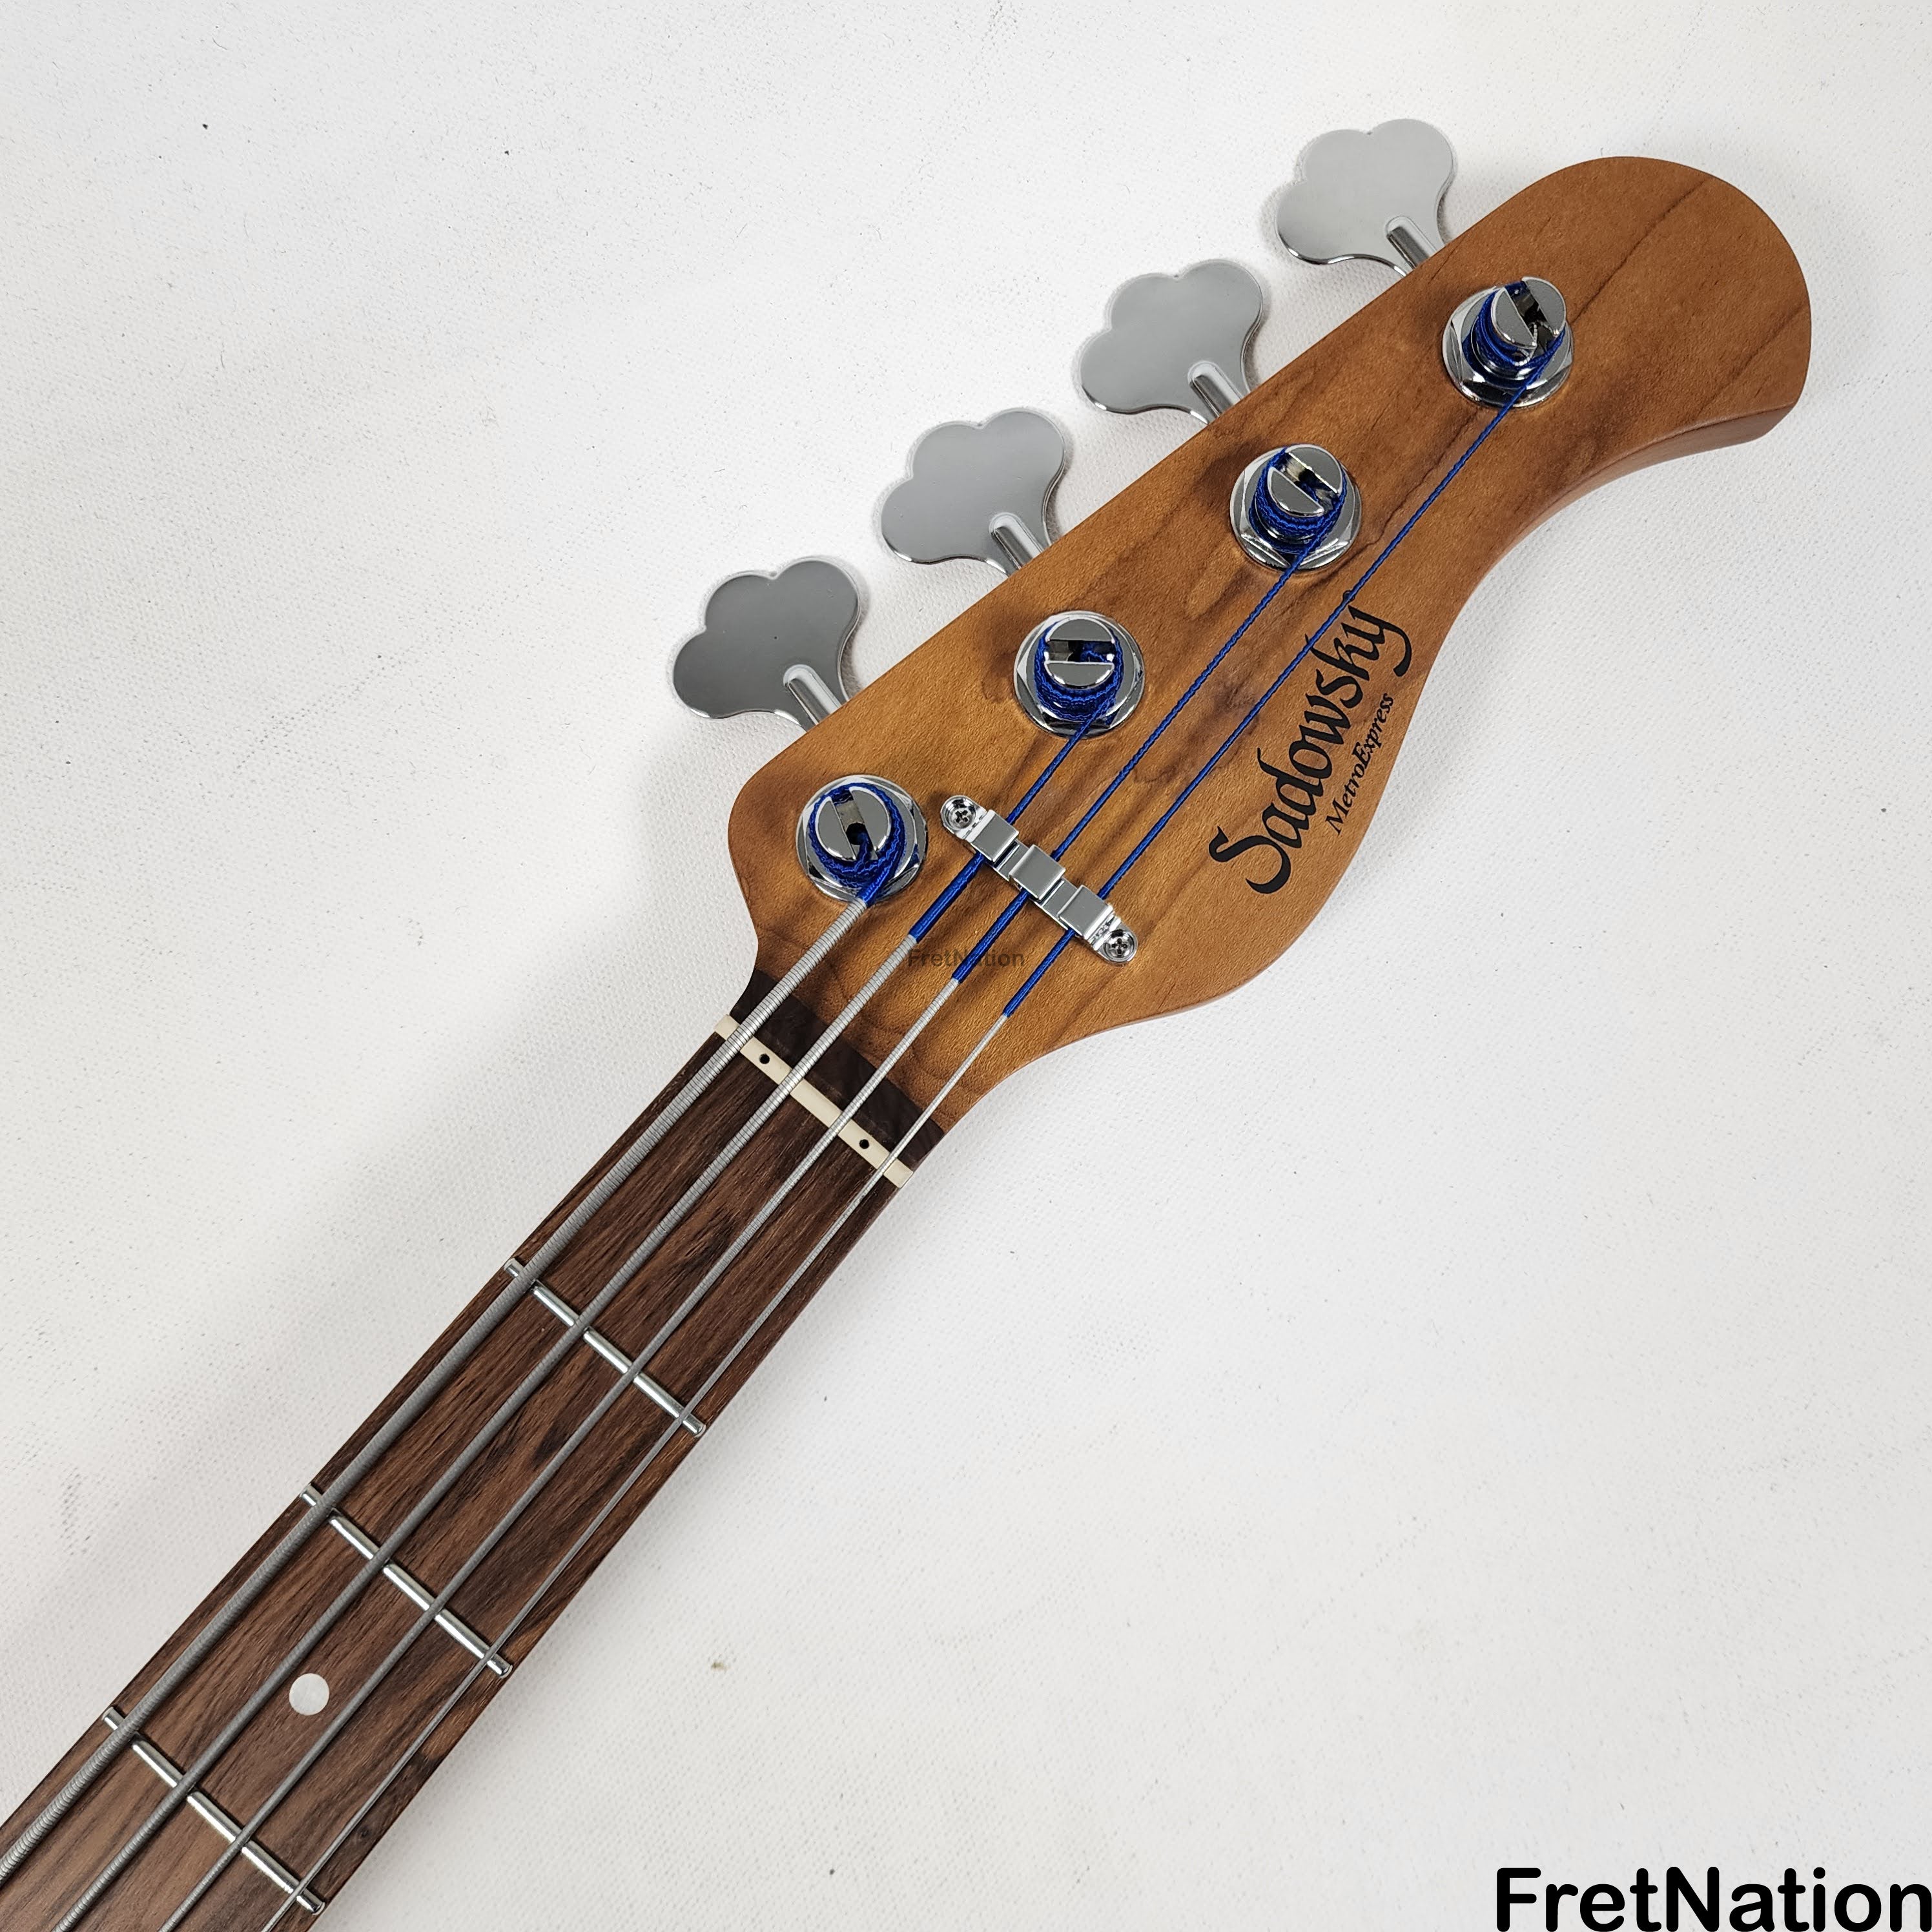 Sadowsky Super MetroExpress Hybrid PJ 4-String Bass - Ice Blue w/ Morado FB  #1605-23 9.38lbs